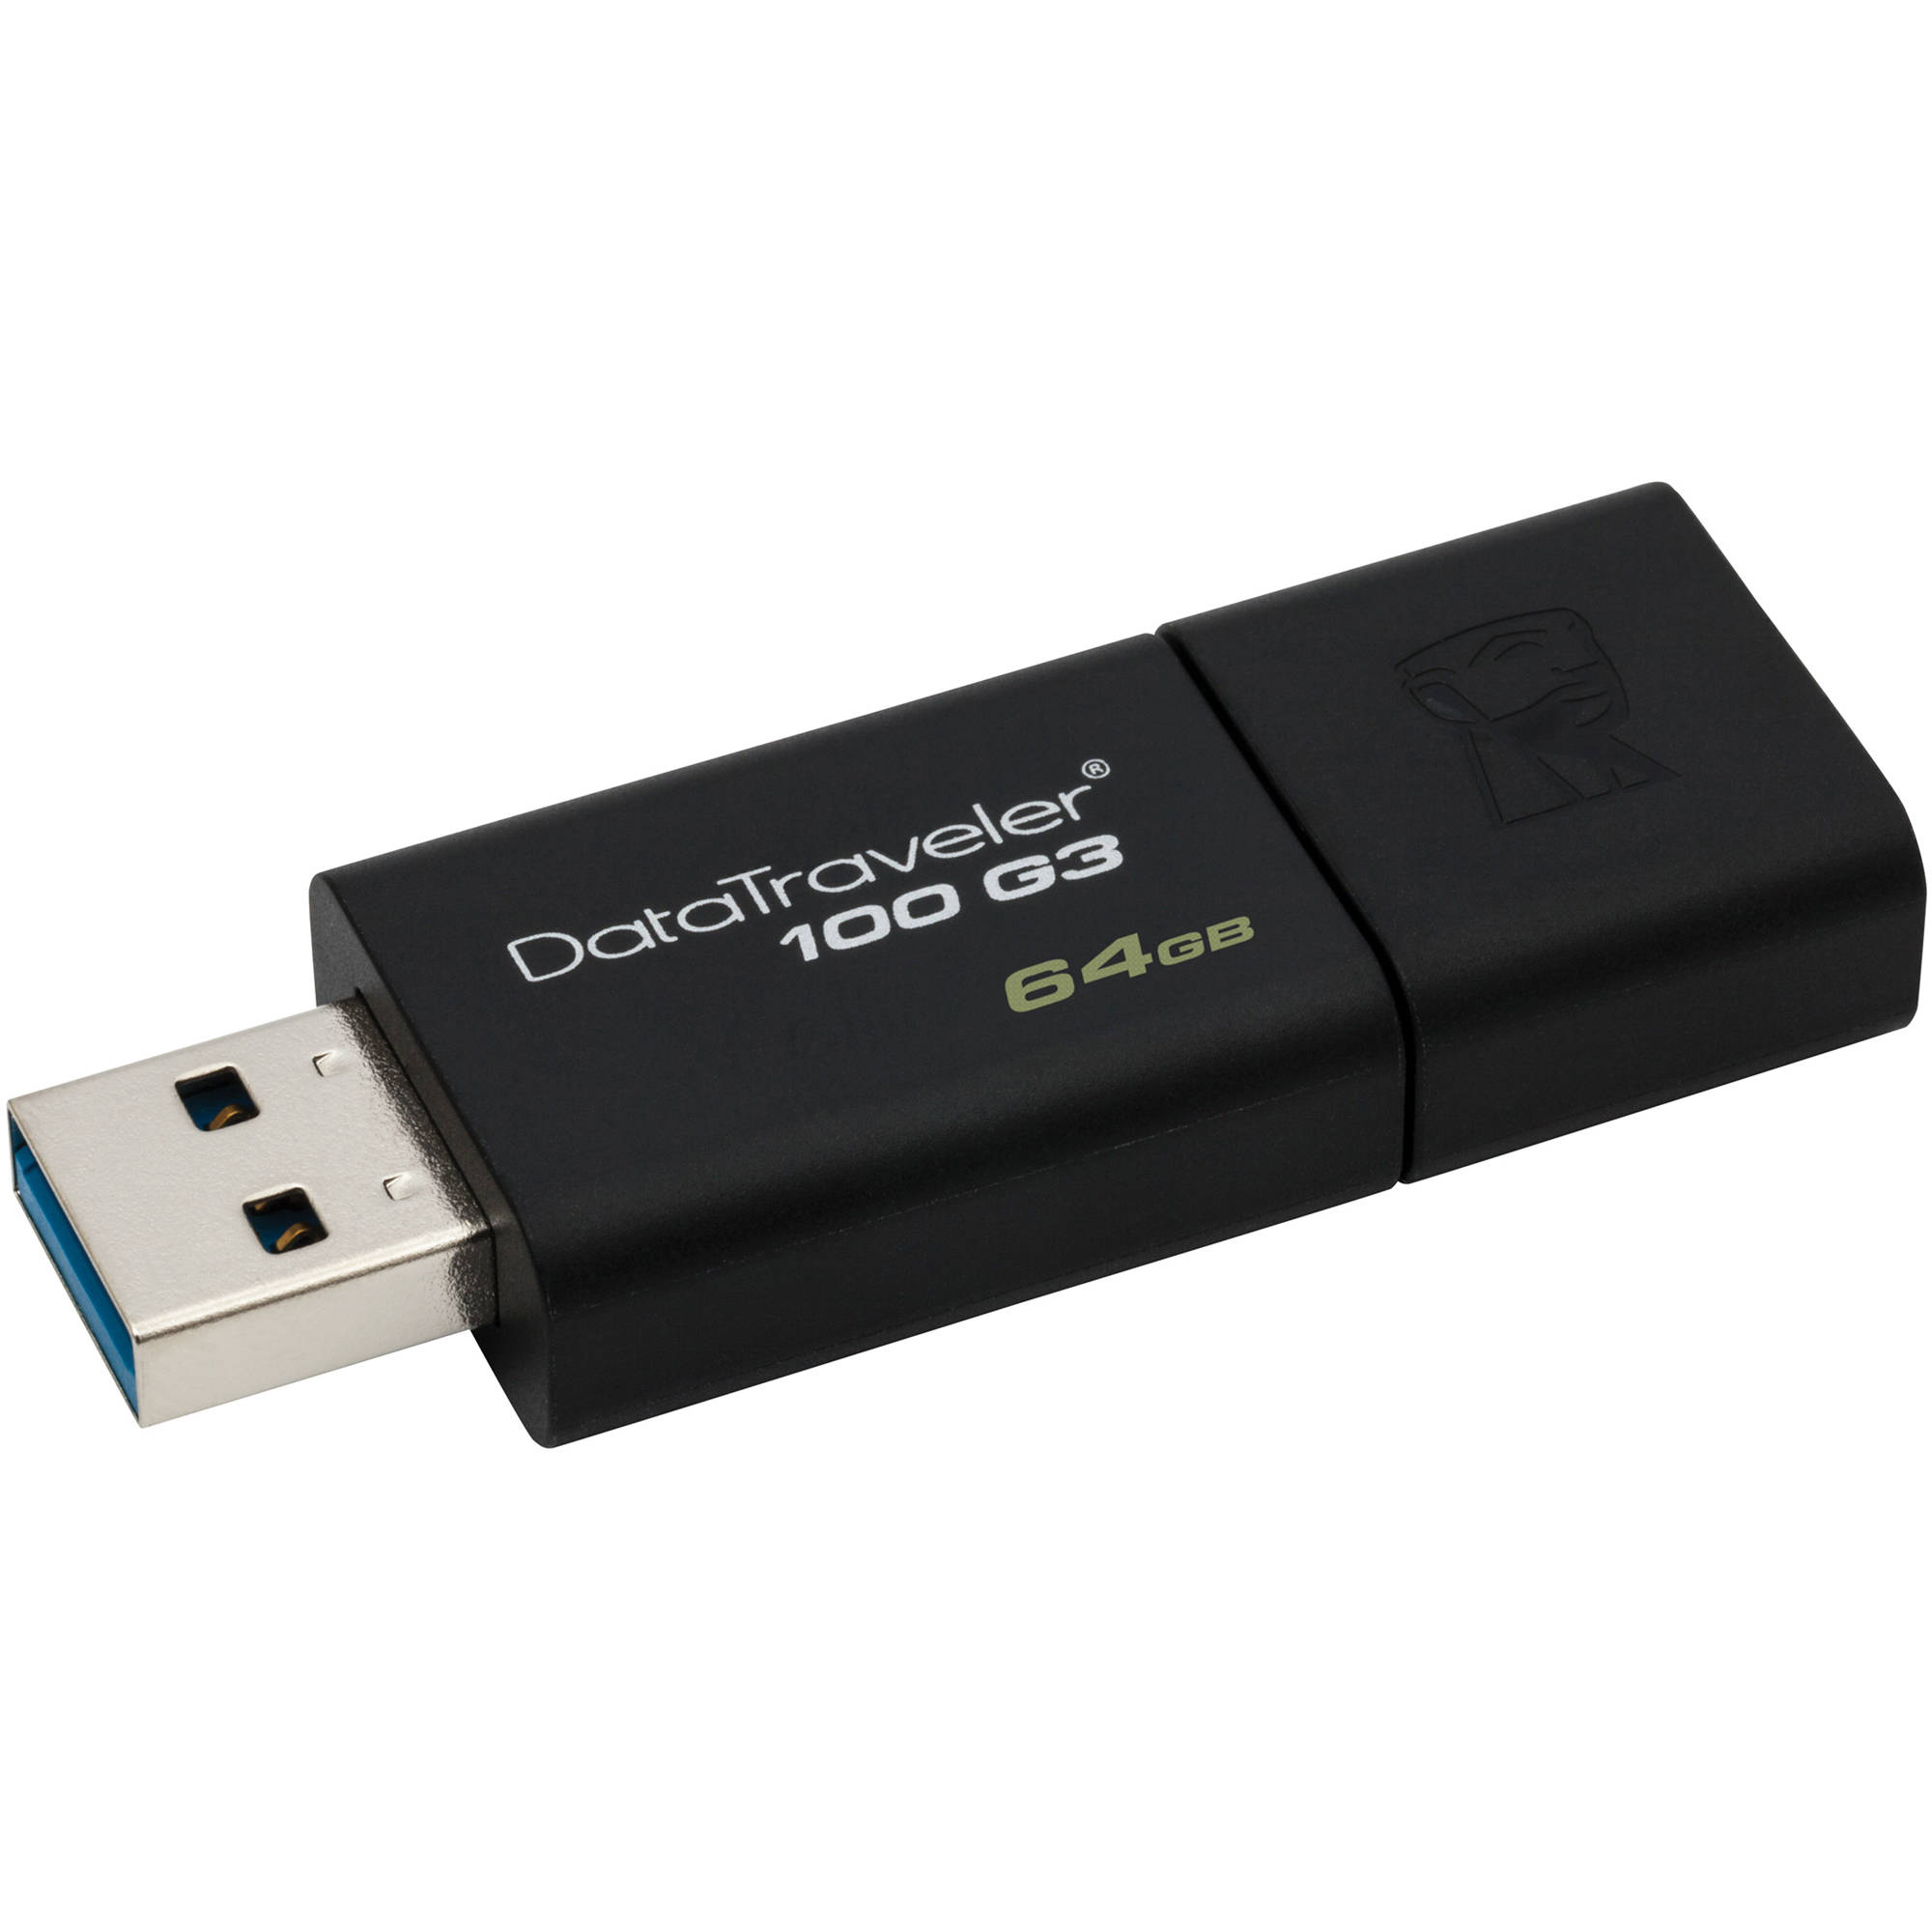 Original Kingston DataTraveler 100 G3 64GB USB 3.0 Flash Drive (DT100G3/64GB)